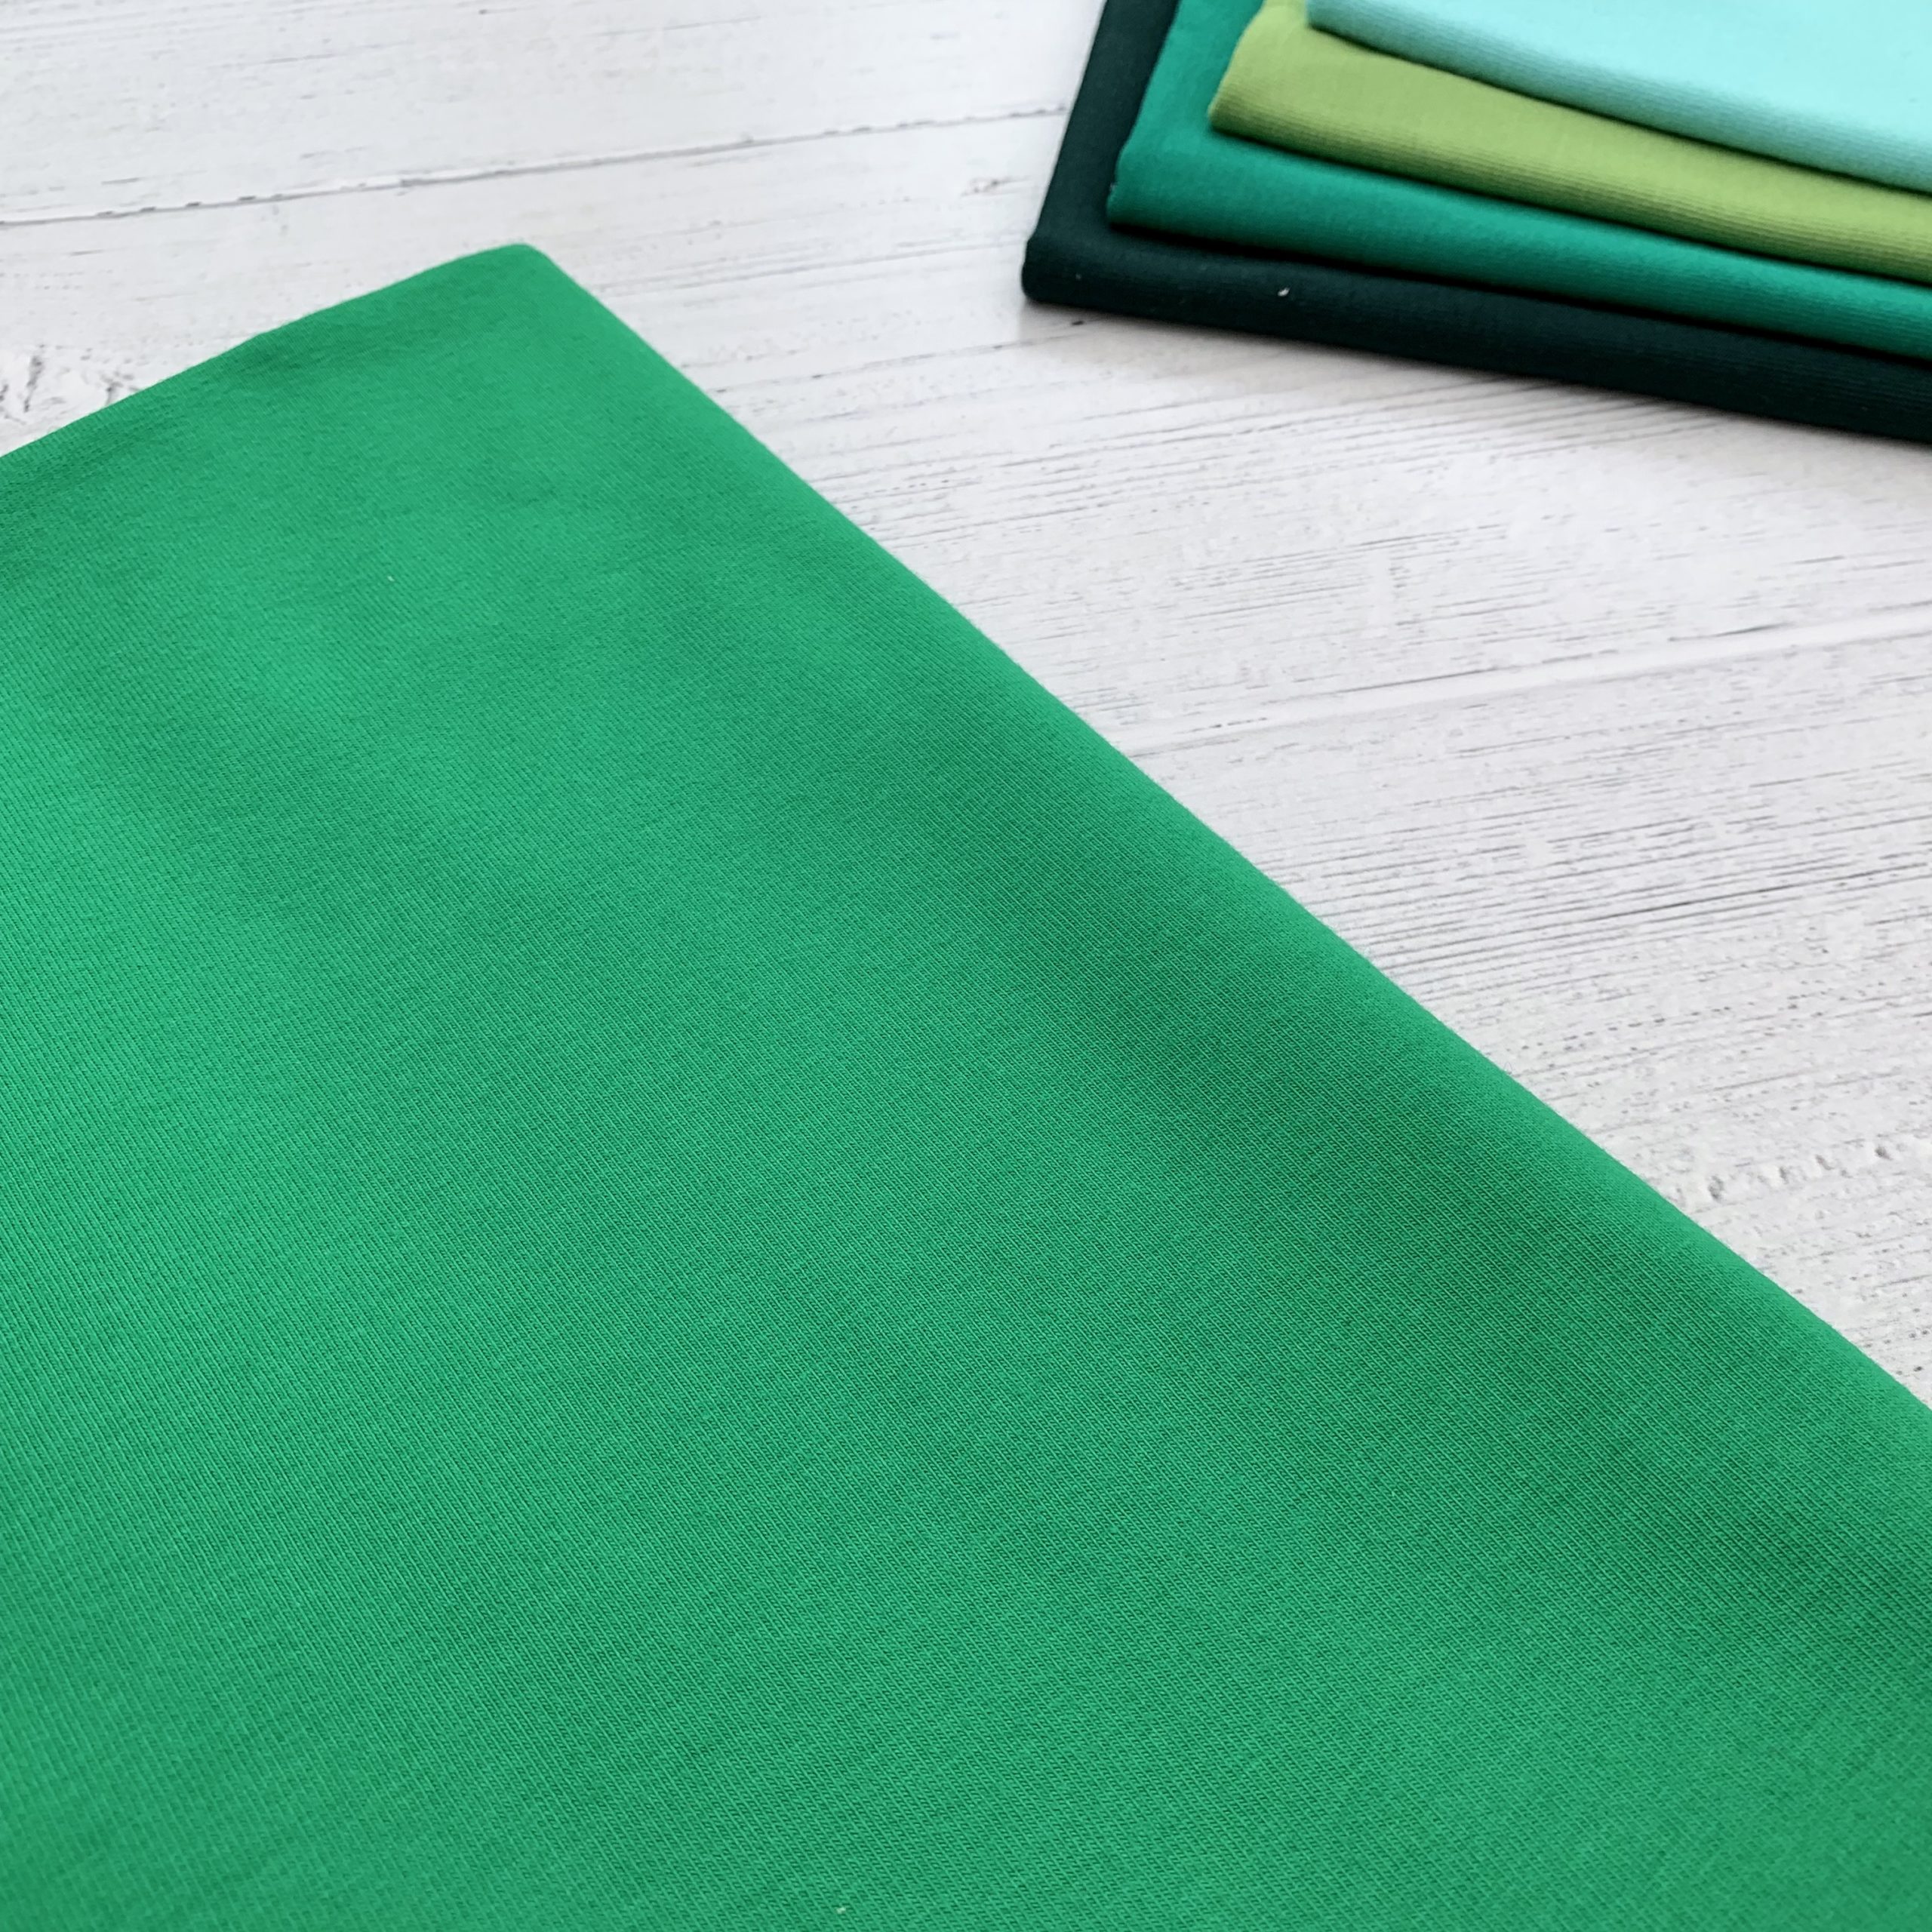 green jersey knit fabric